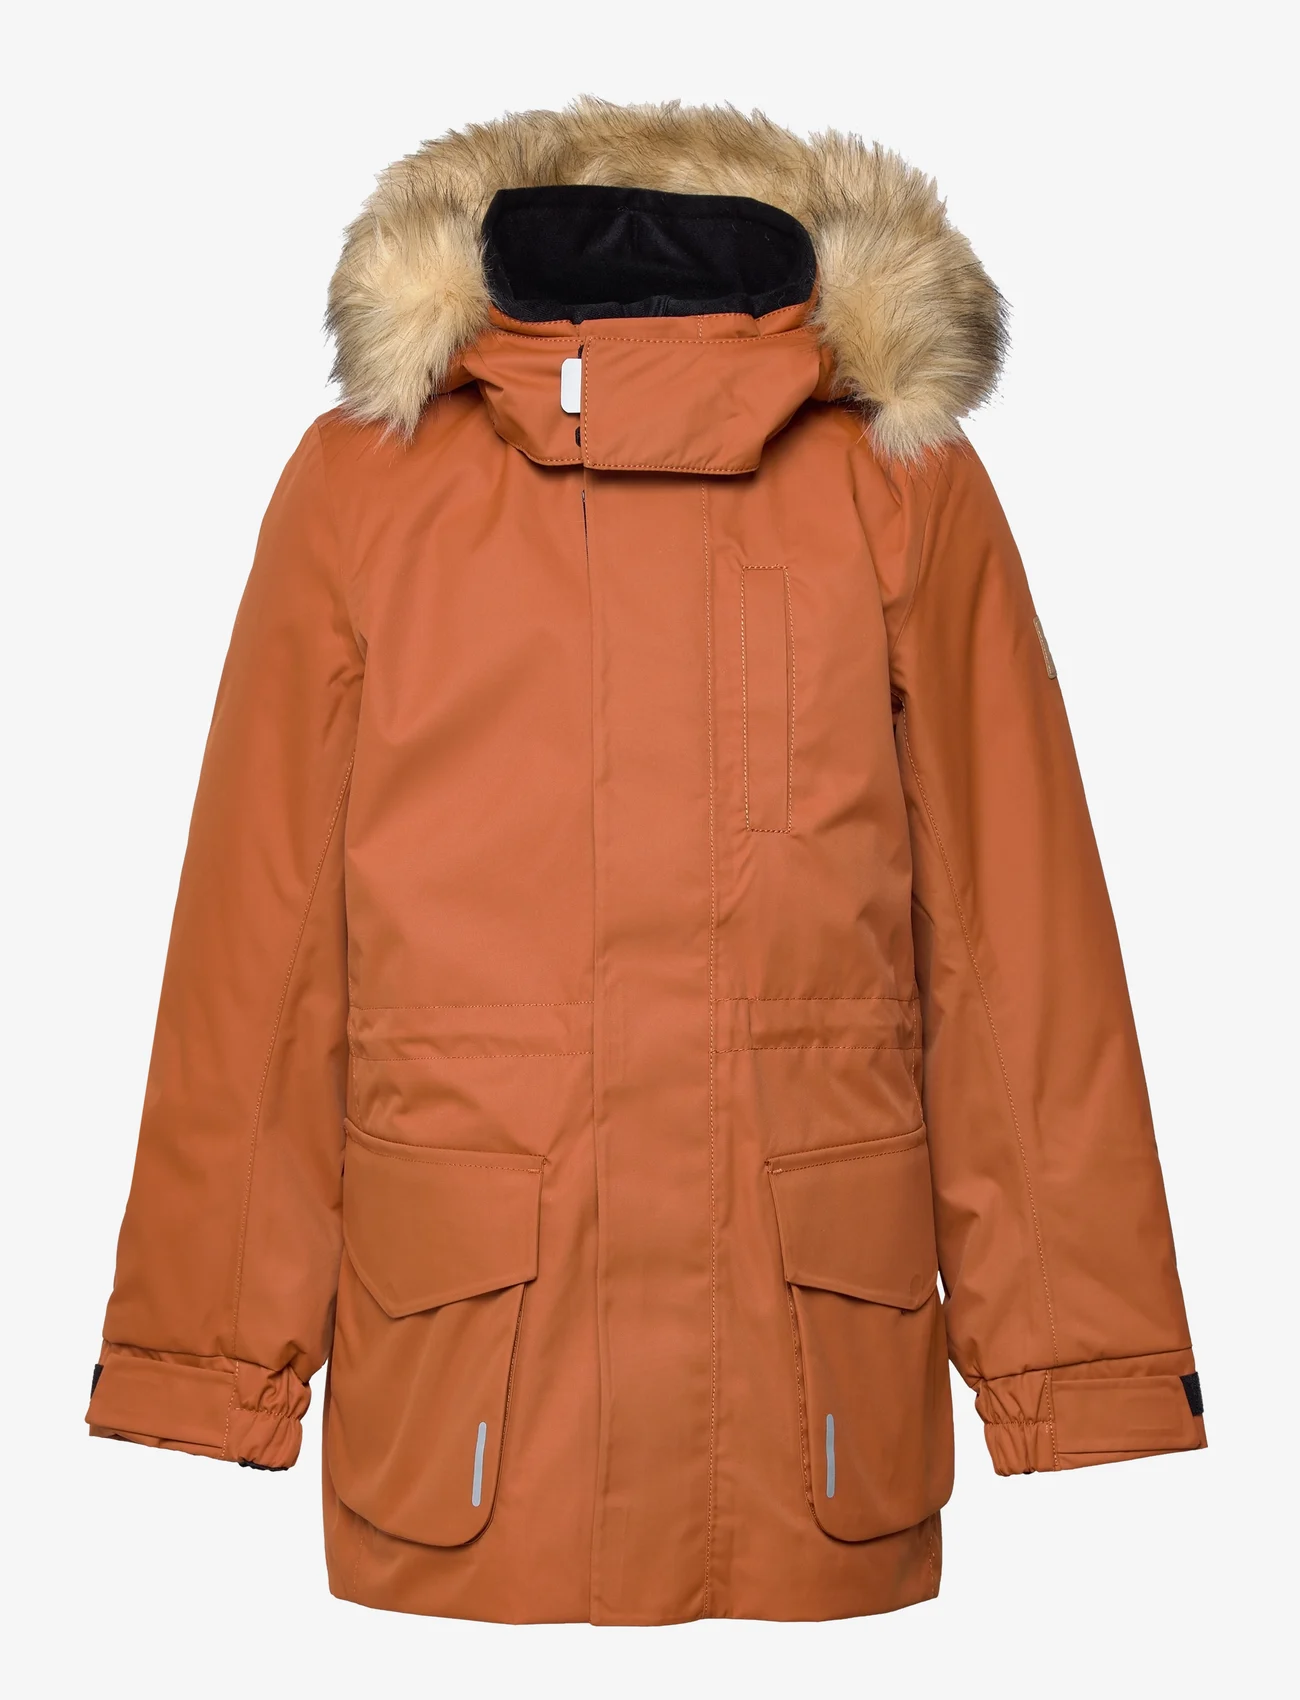 Reima - Reimatec winter jacket, Naapuri - parkad - cinnamon brown - 0